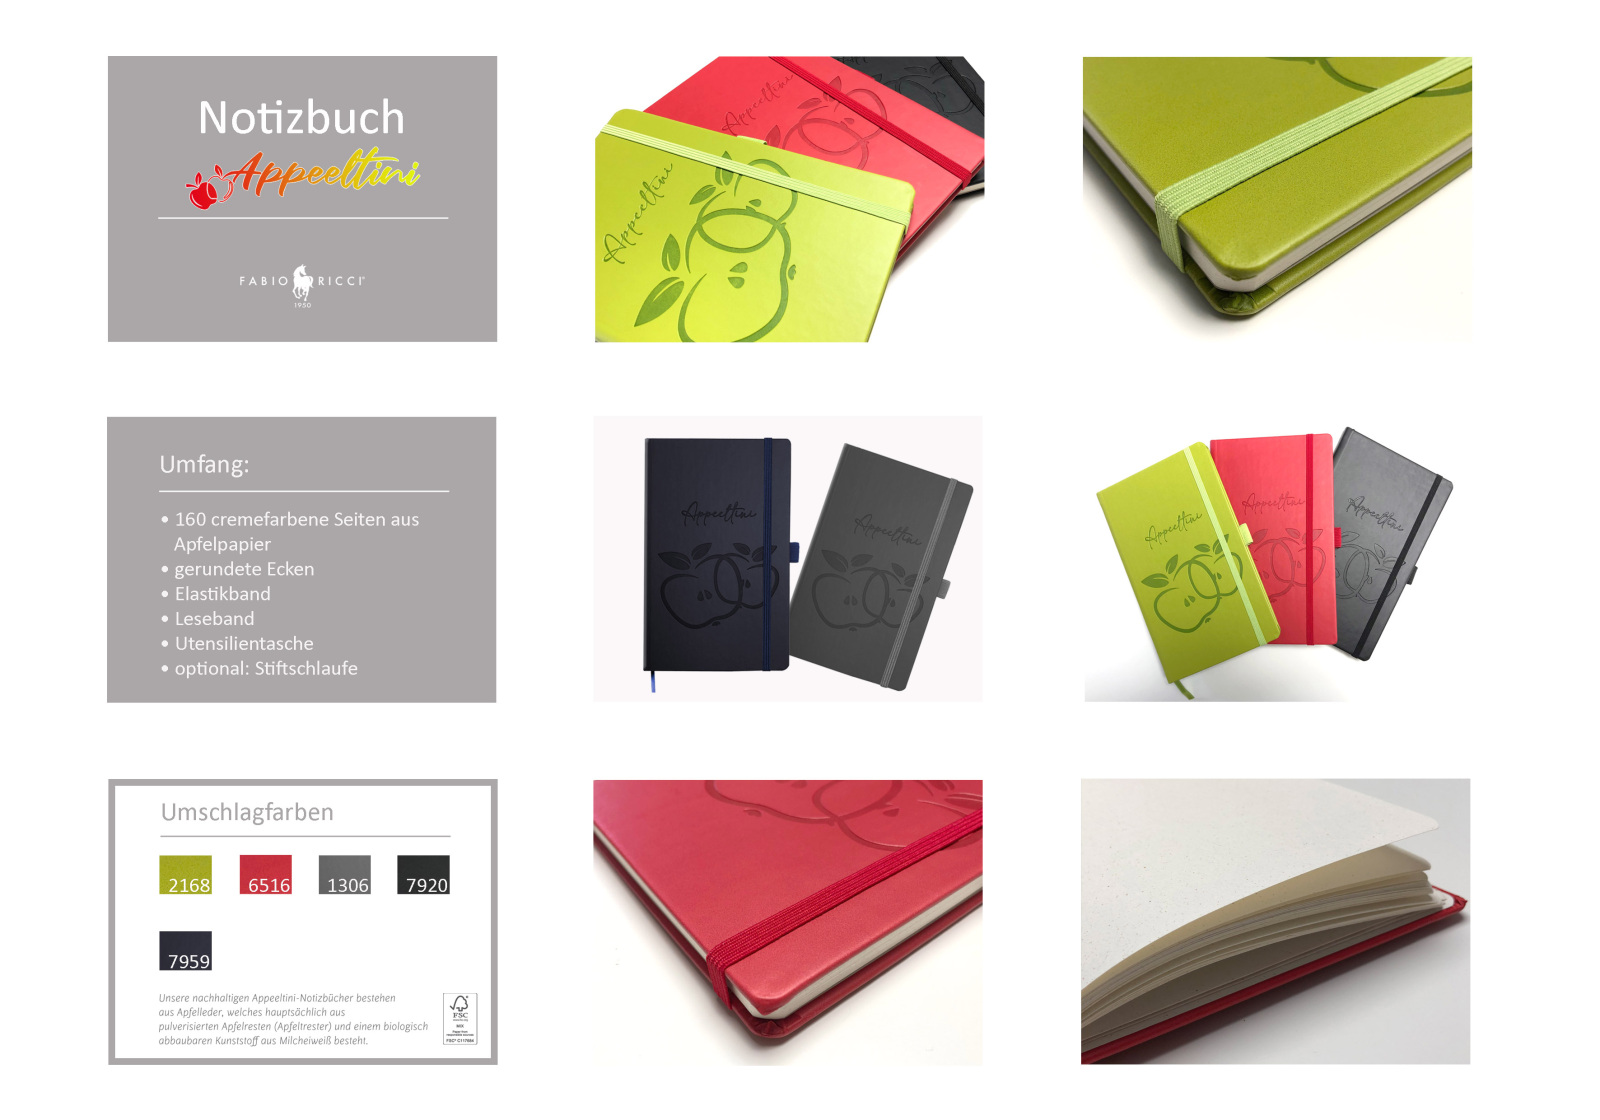 Appeeltini Notizbuch in 5 Farben